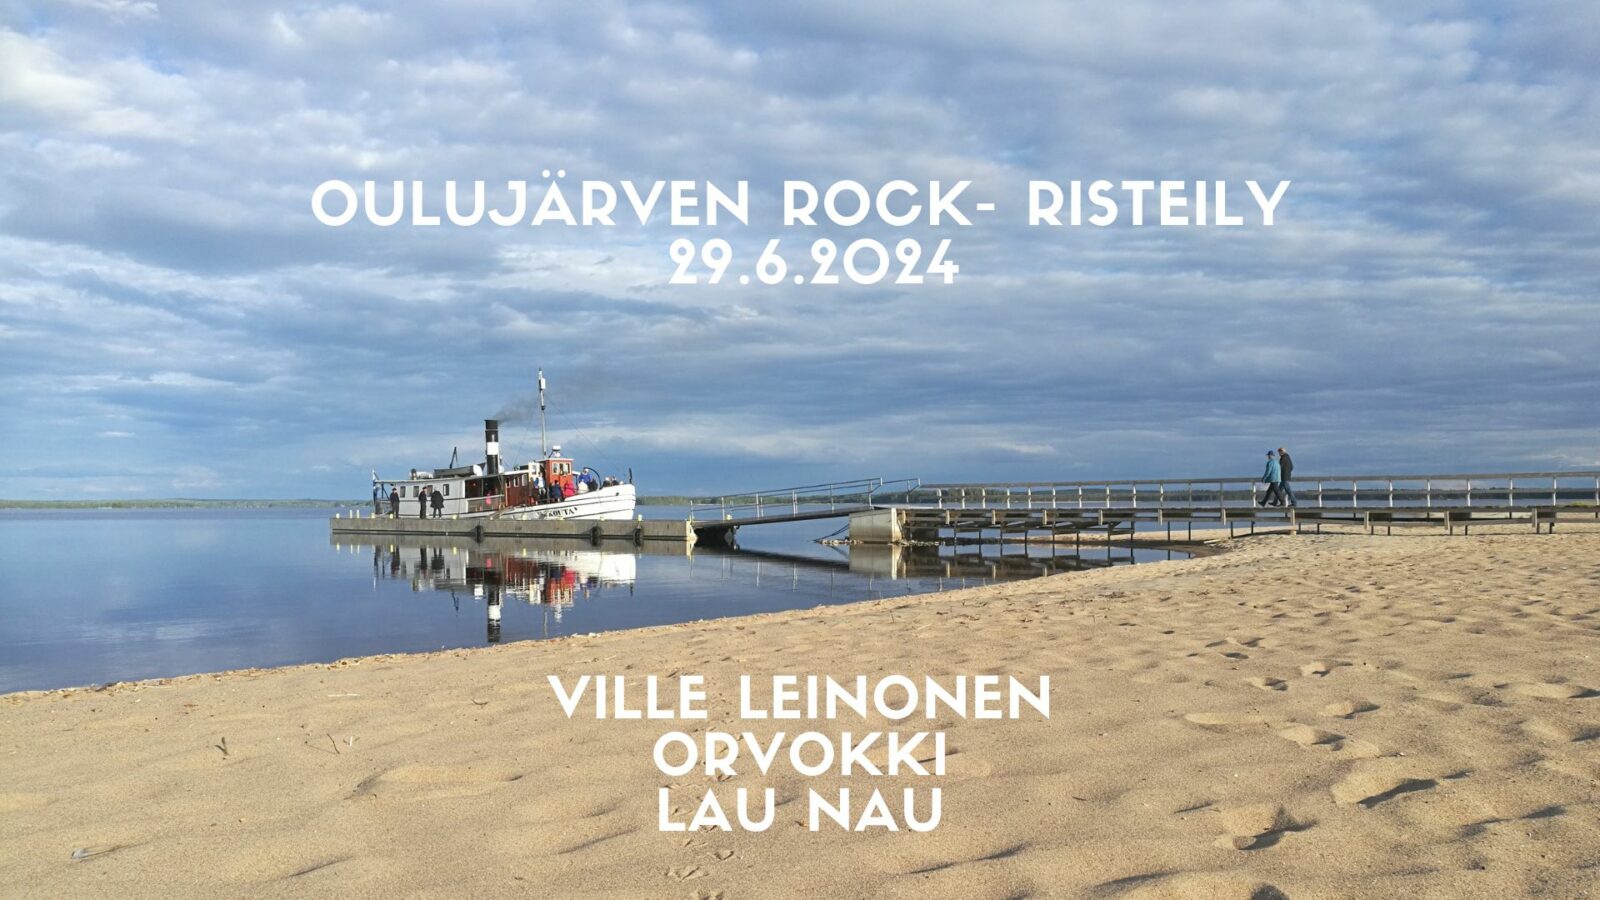 Oulujärvi Rock-risteily 29.6.2024